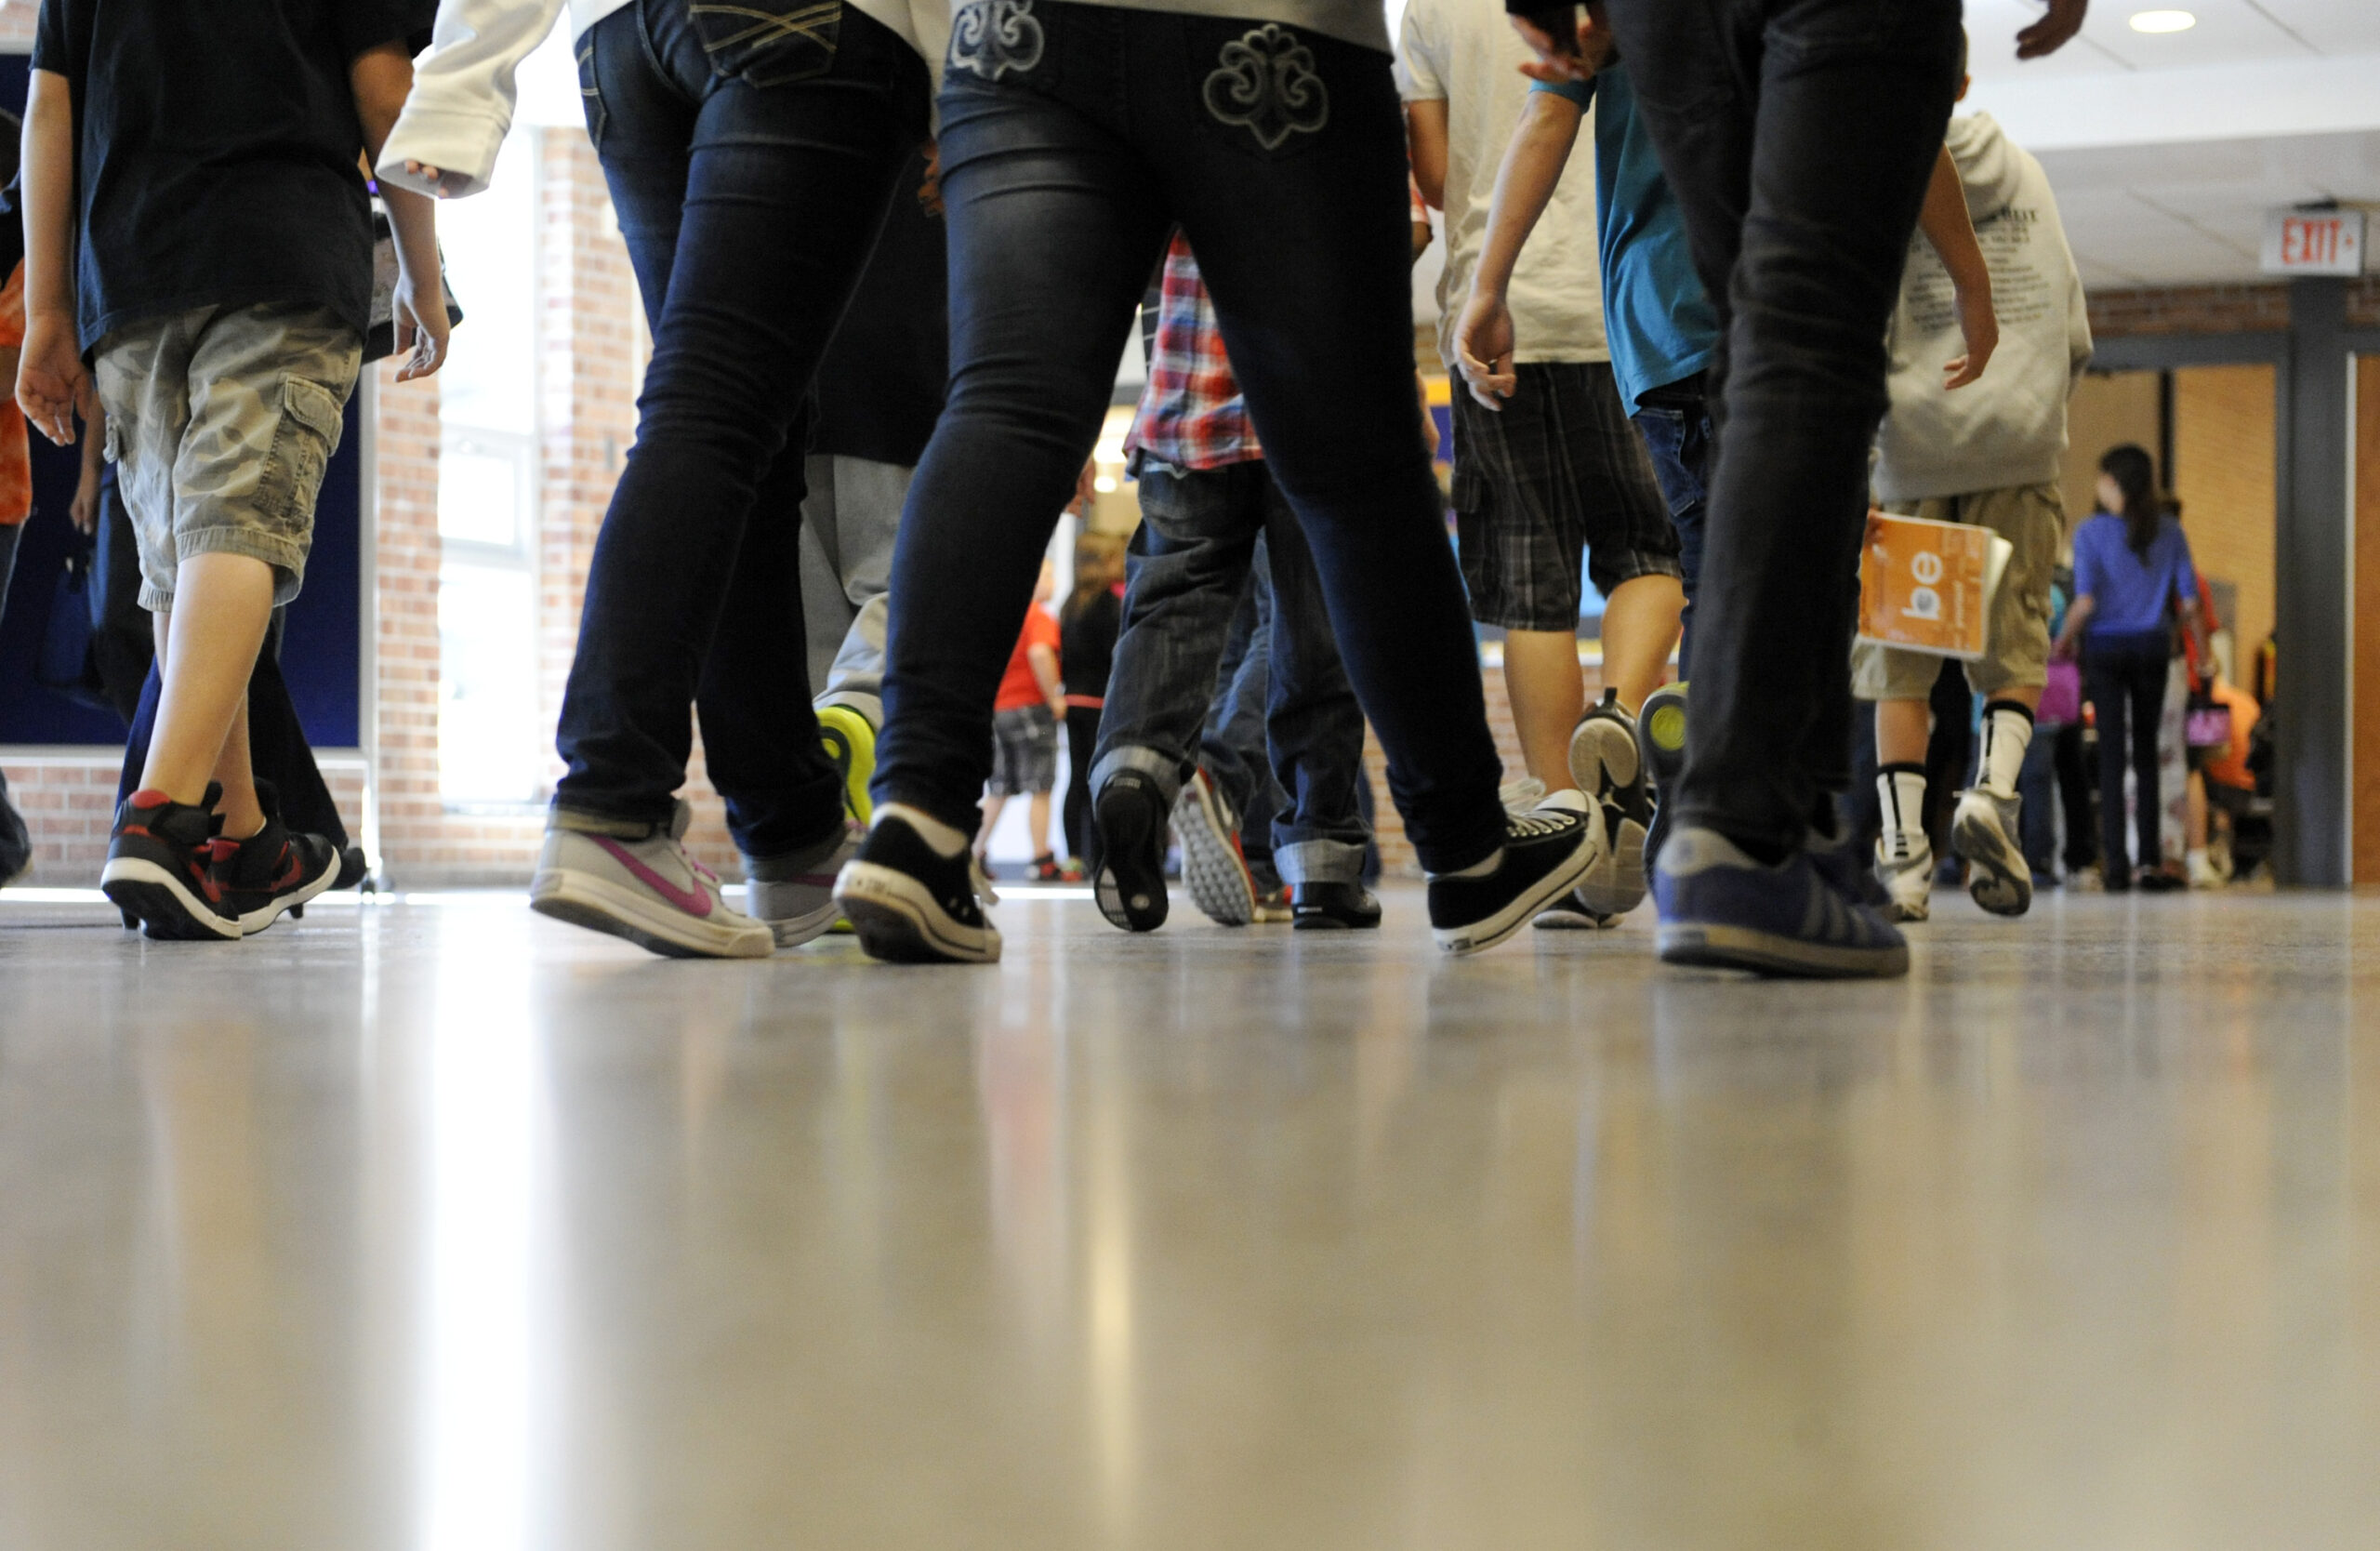 Students walk in the hallways at school